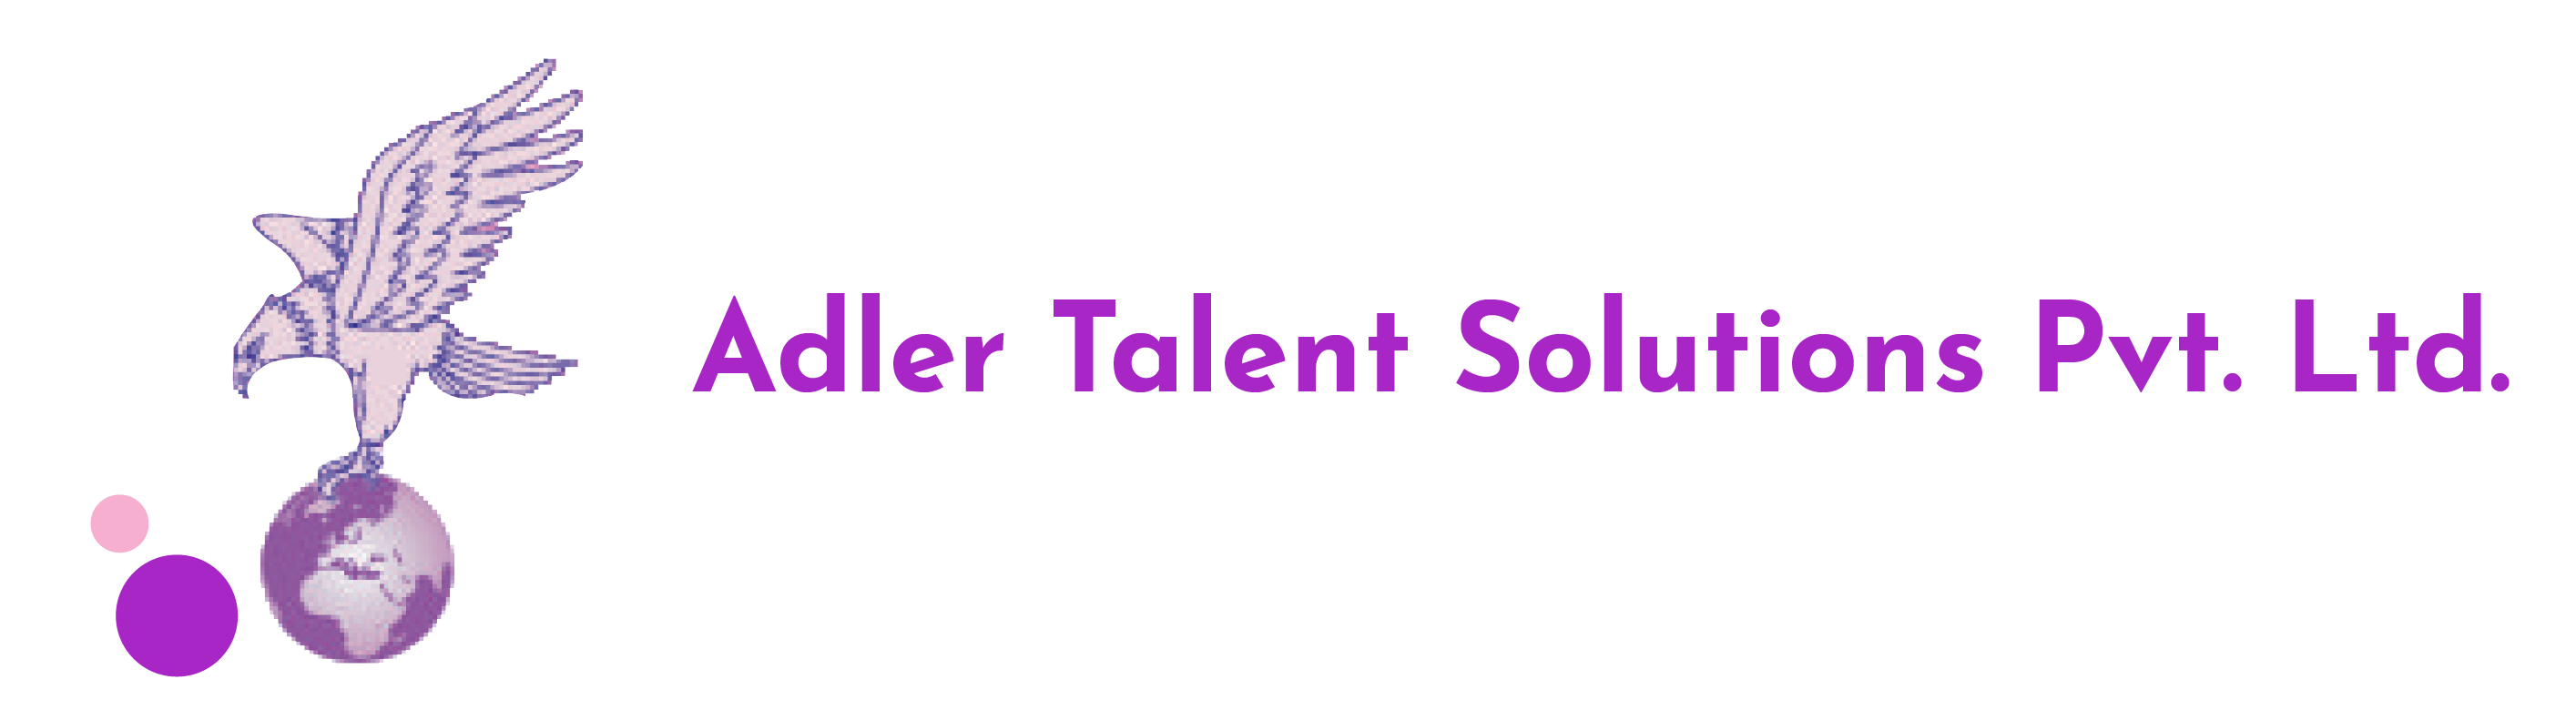 Adler Talent Solutions